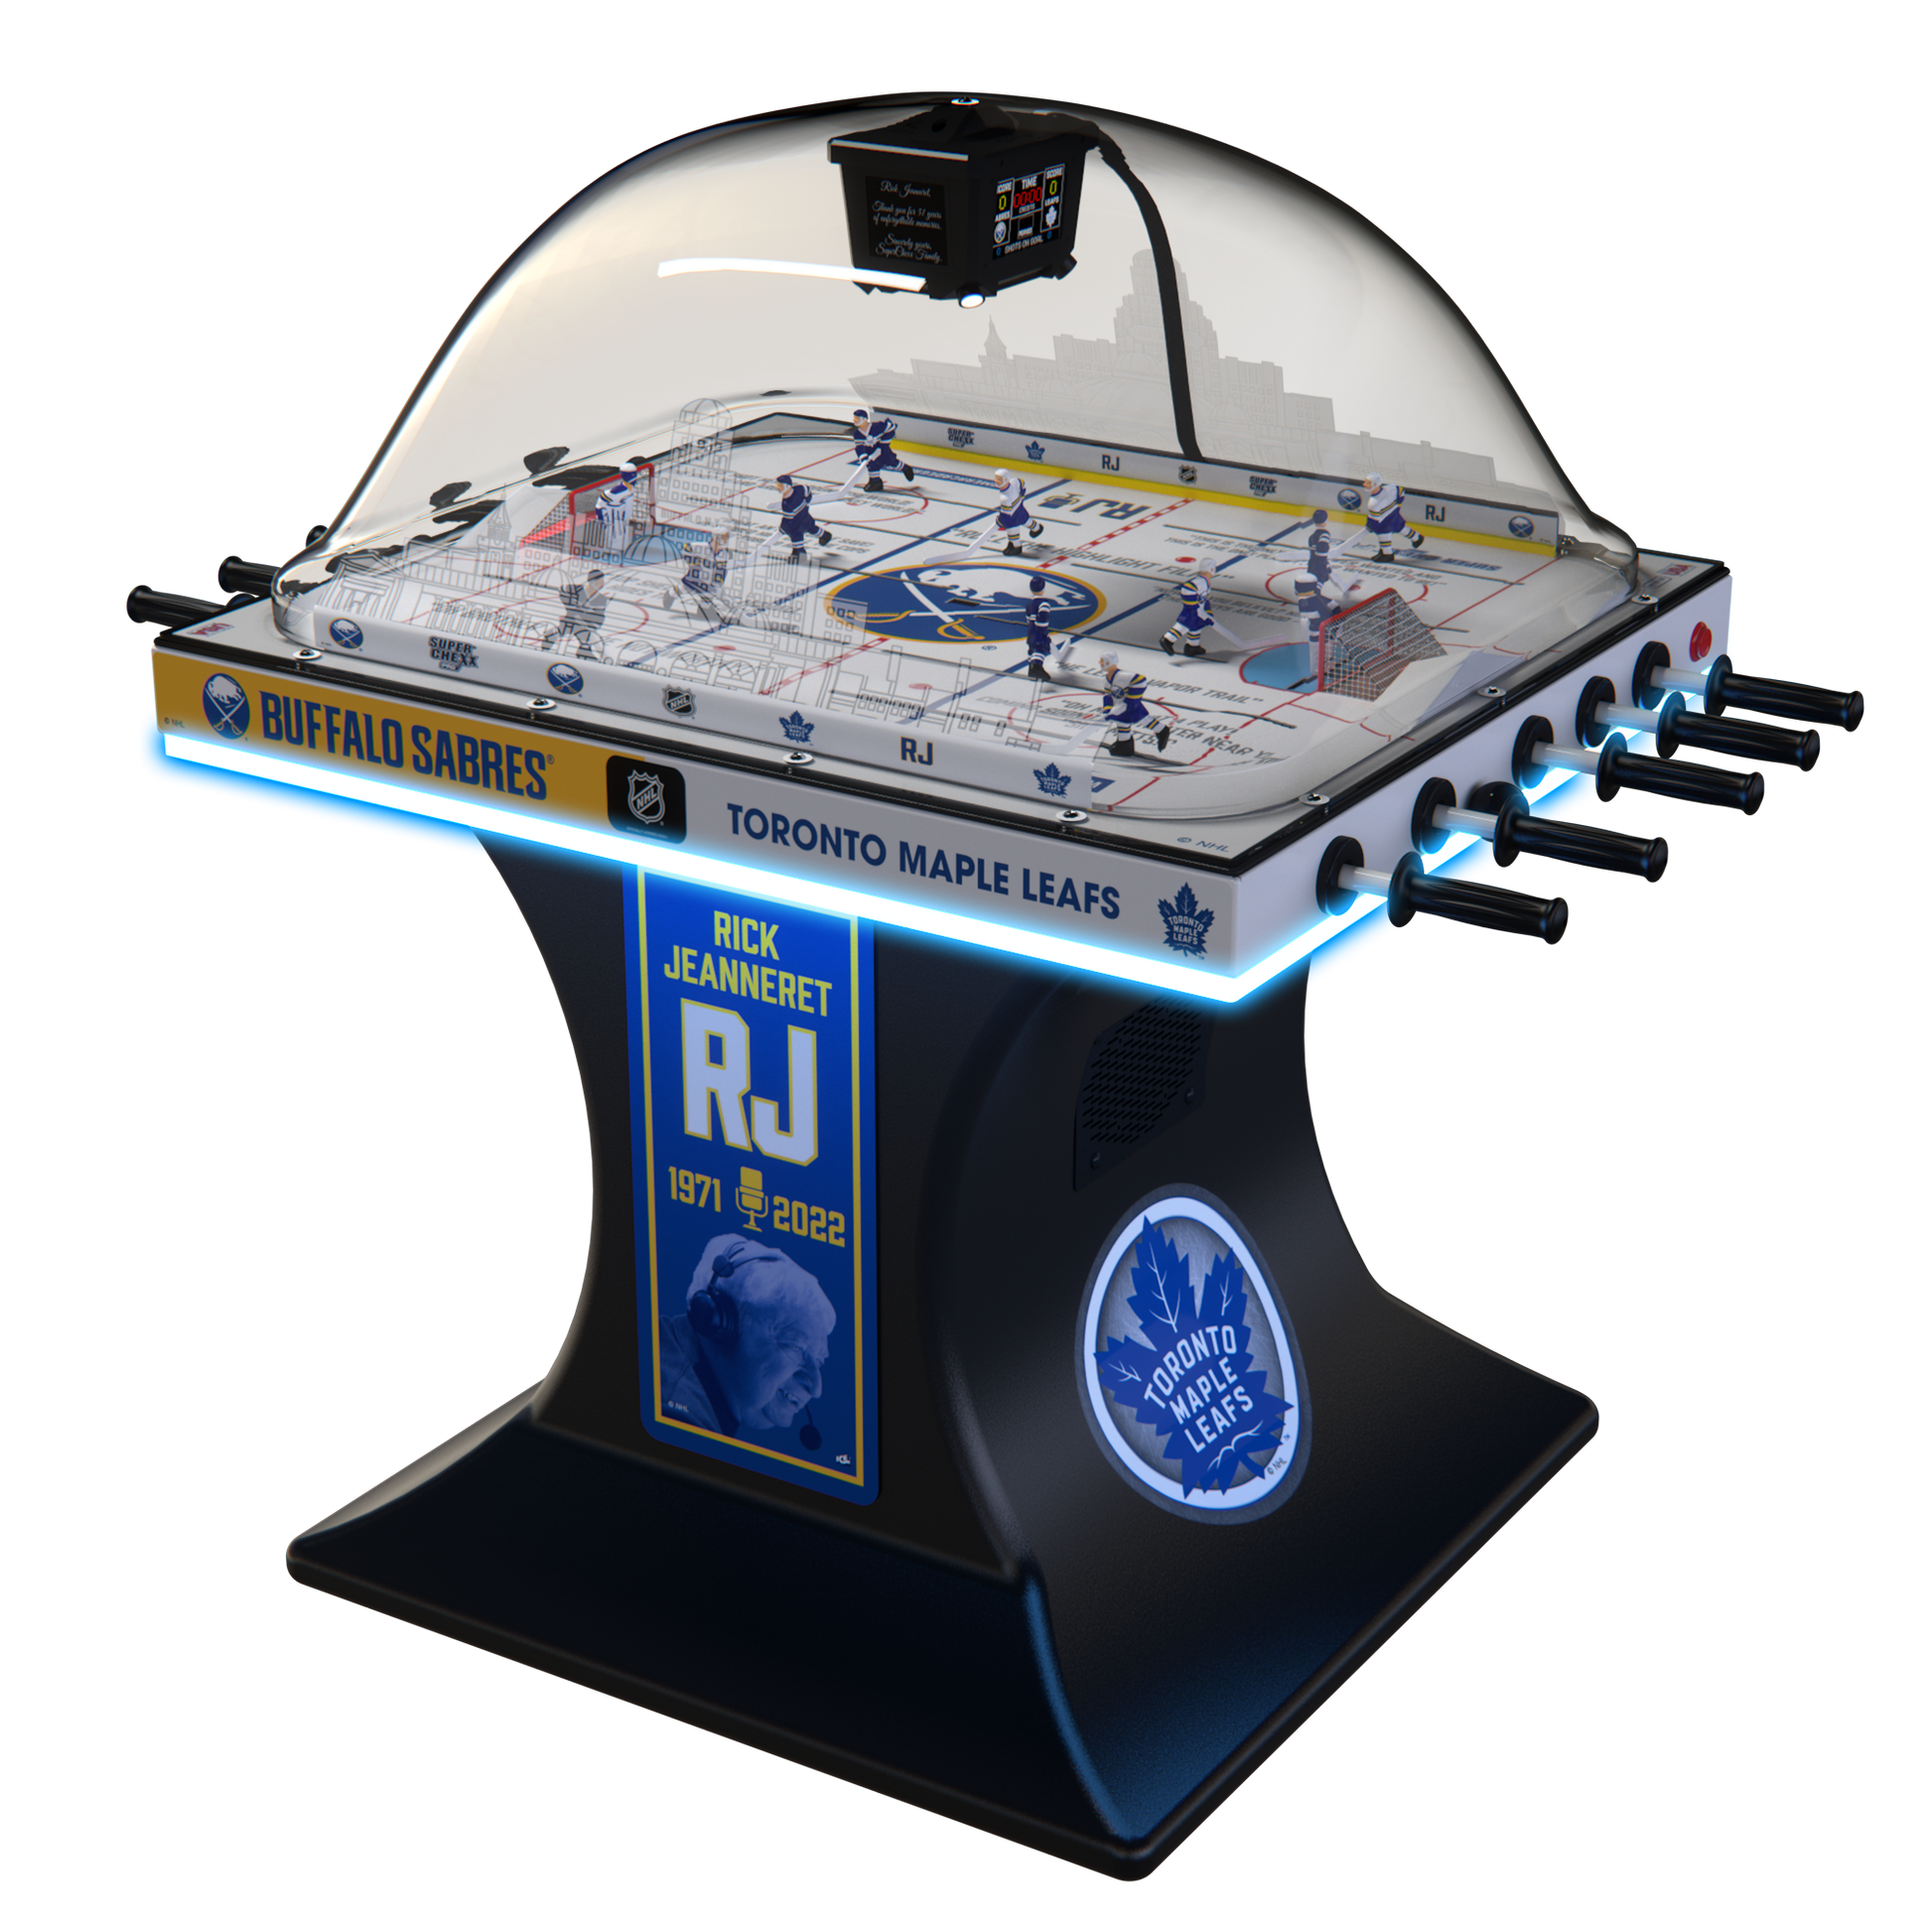 RJ Edition Super Chexx Pro Bubble Hockey Arcade Innovative Concepts in Entertainment   